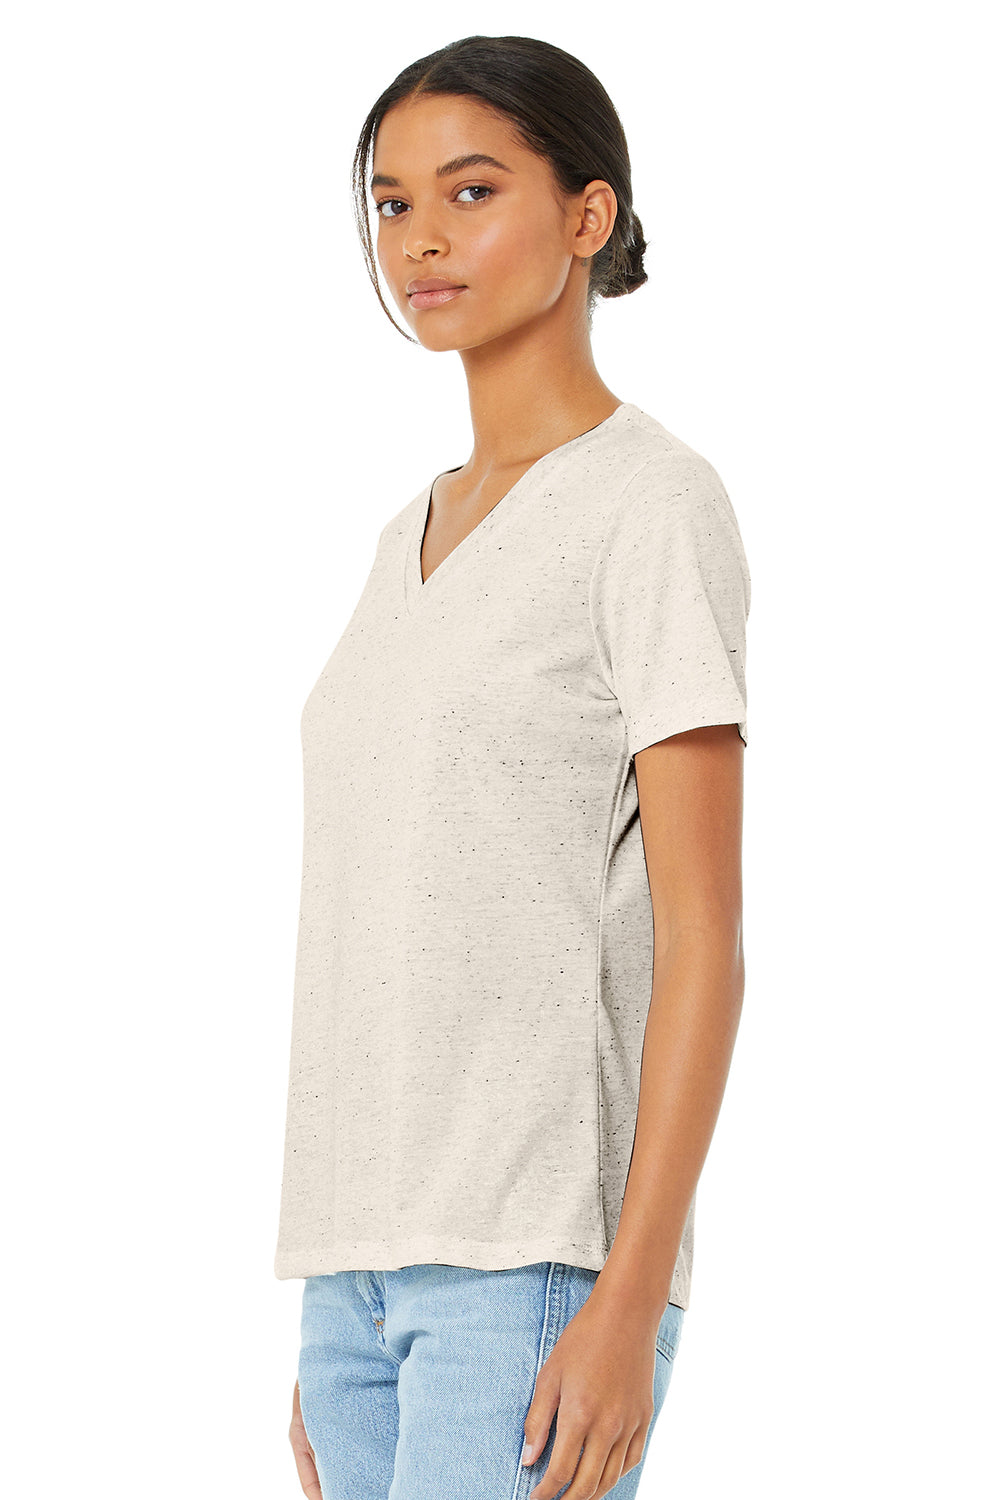 Bella + Canvas BC6415 Womens Short Sleeve V-Neck T-Shirt Oatmeal Model 3Q